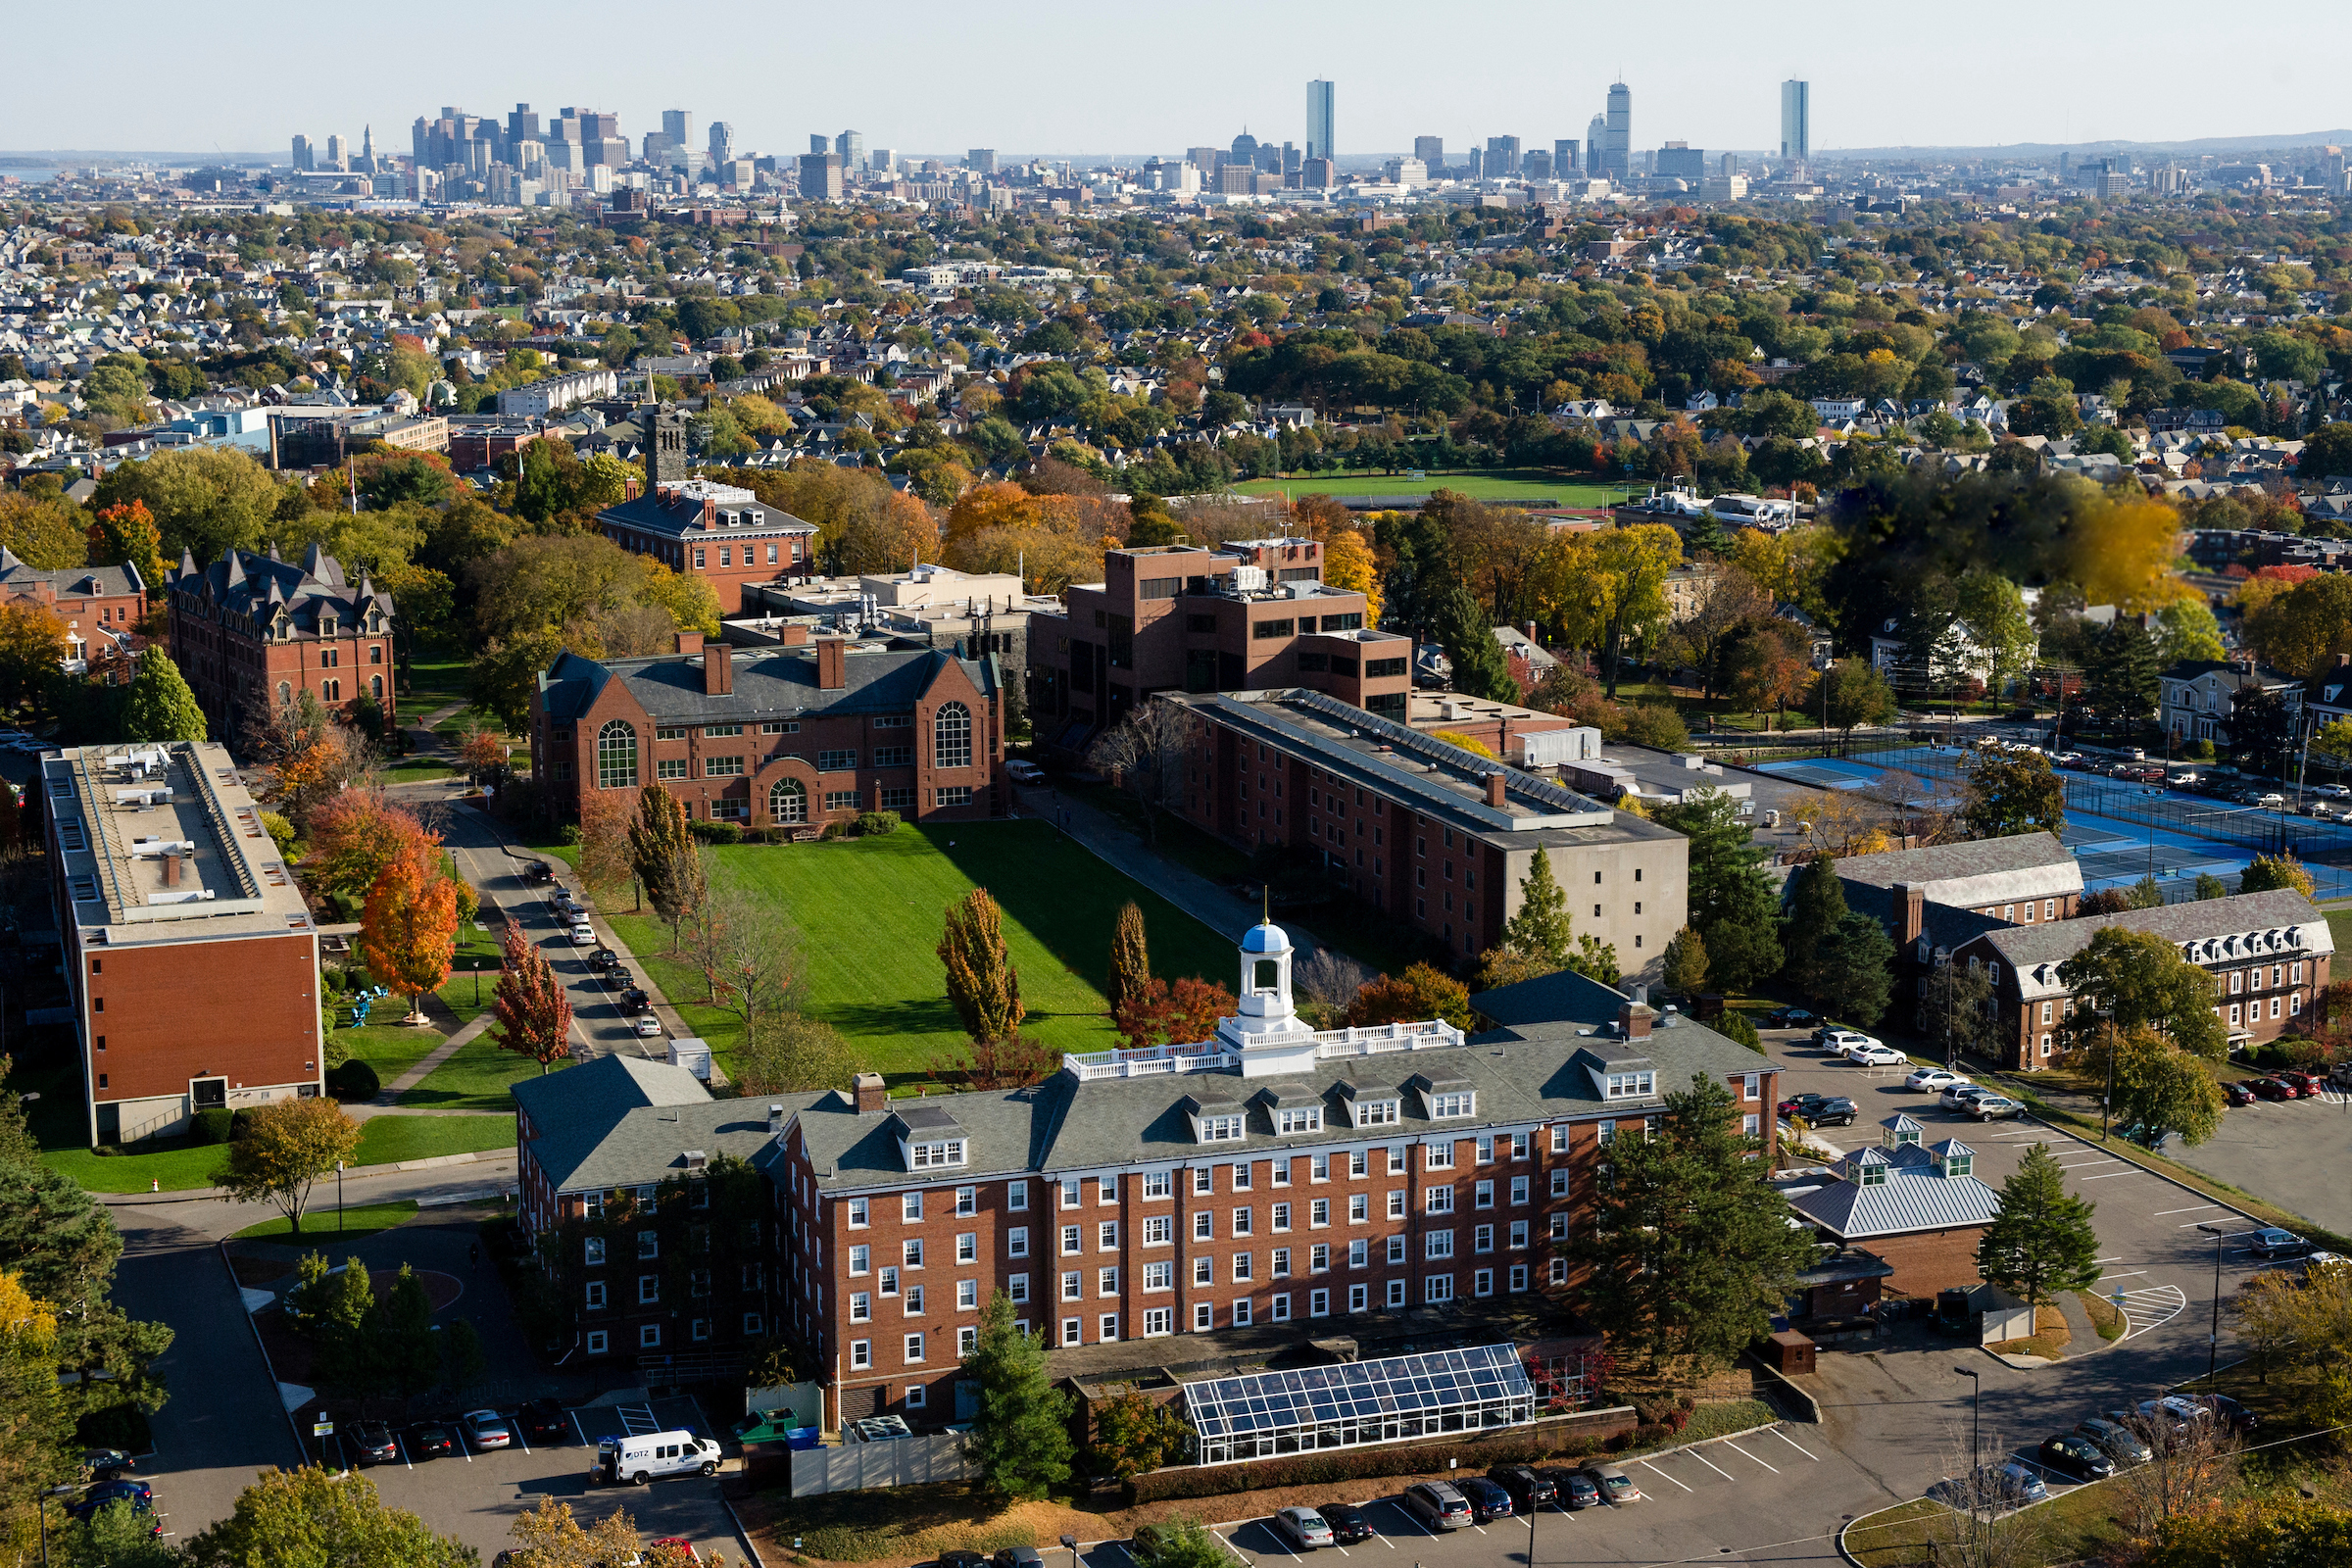 Medford/Somerville campus aerial view